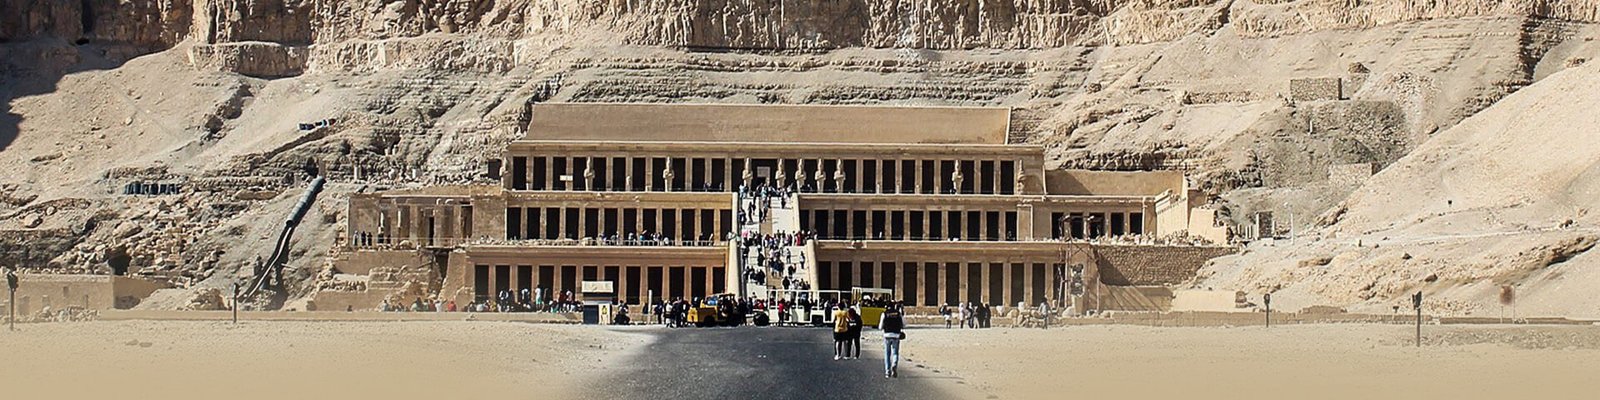 Hurghada, Kairo, Luxor, Sharm, Pyramiden Ausflüge & Nilkreutzfahrten